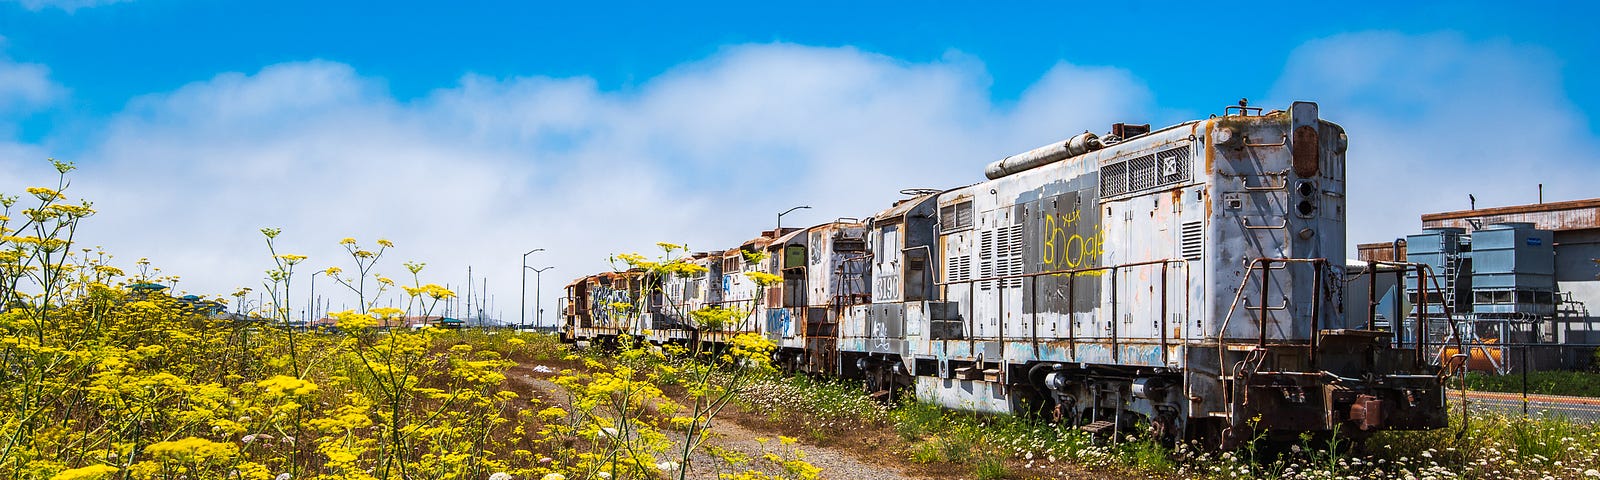 Abandoned diesel locomotives in Eureka, California.